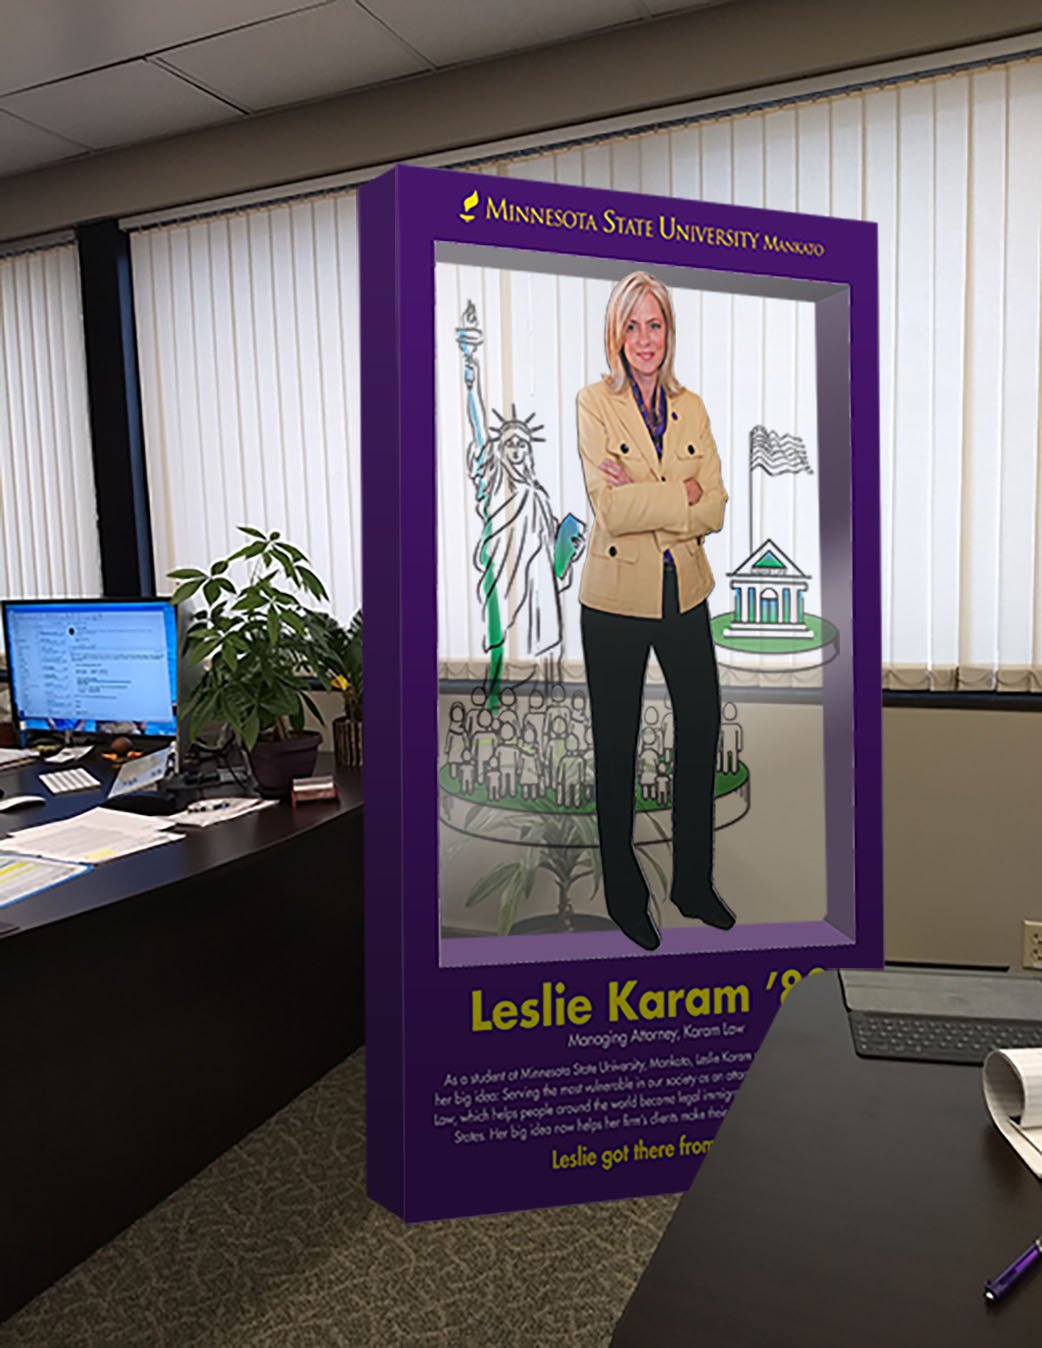 Square cardboard cutout of Leslie Karam, '88 alumni of MNSU 